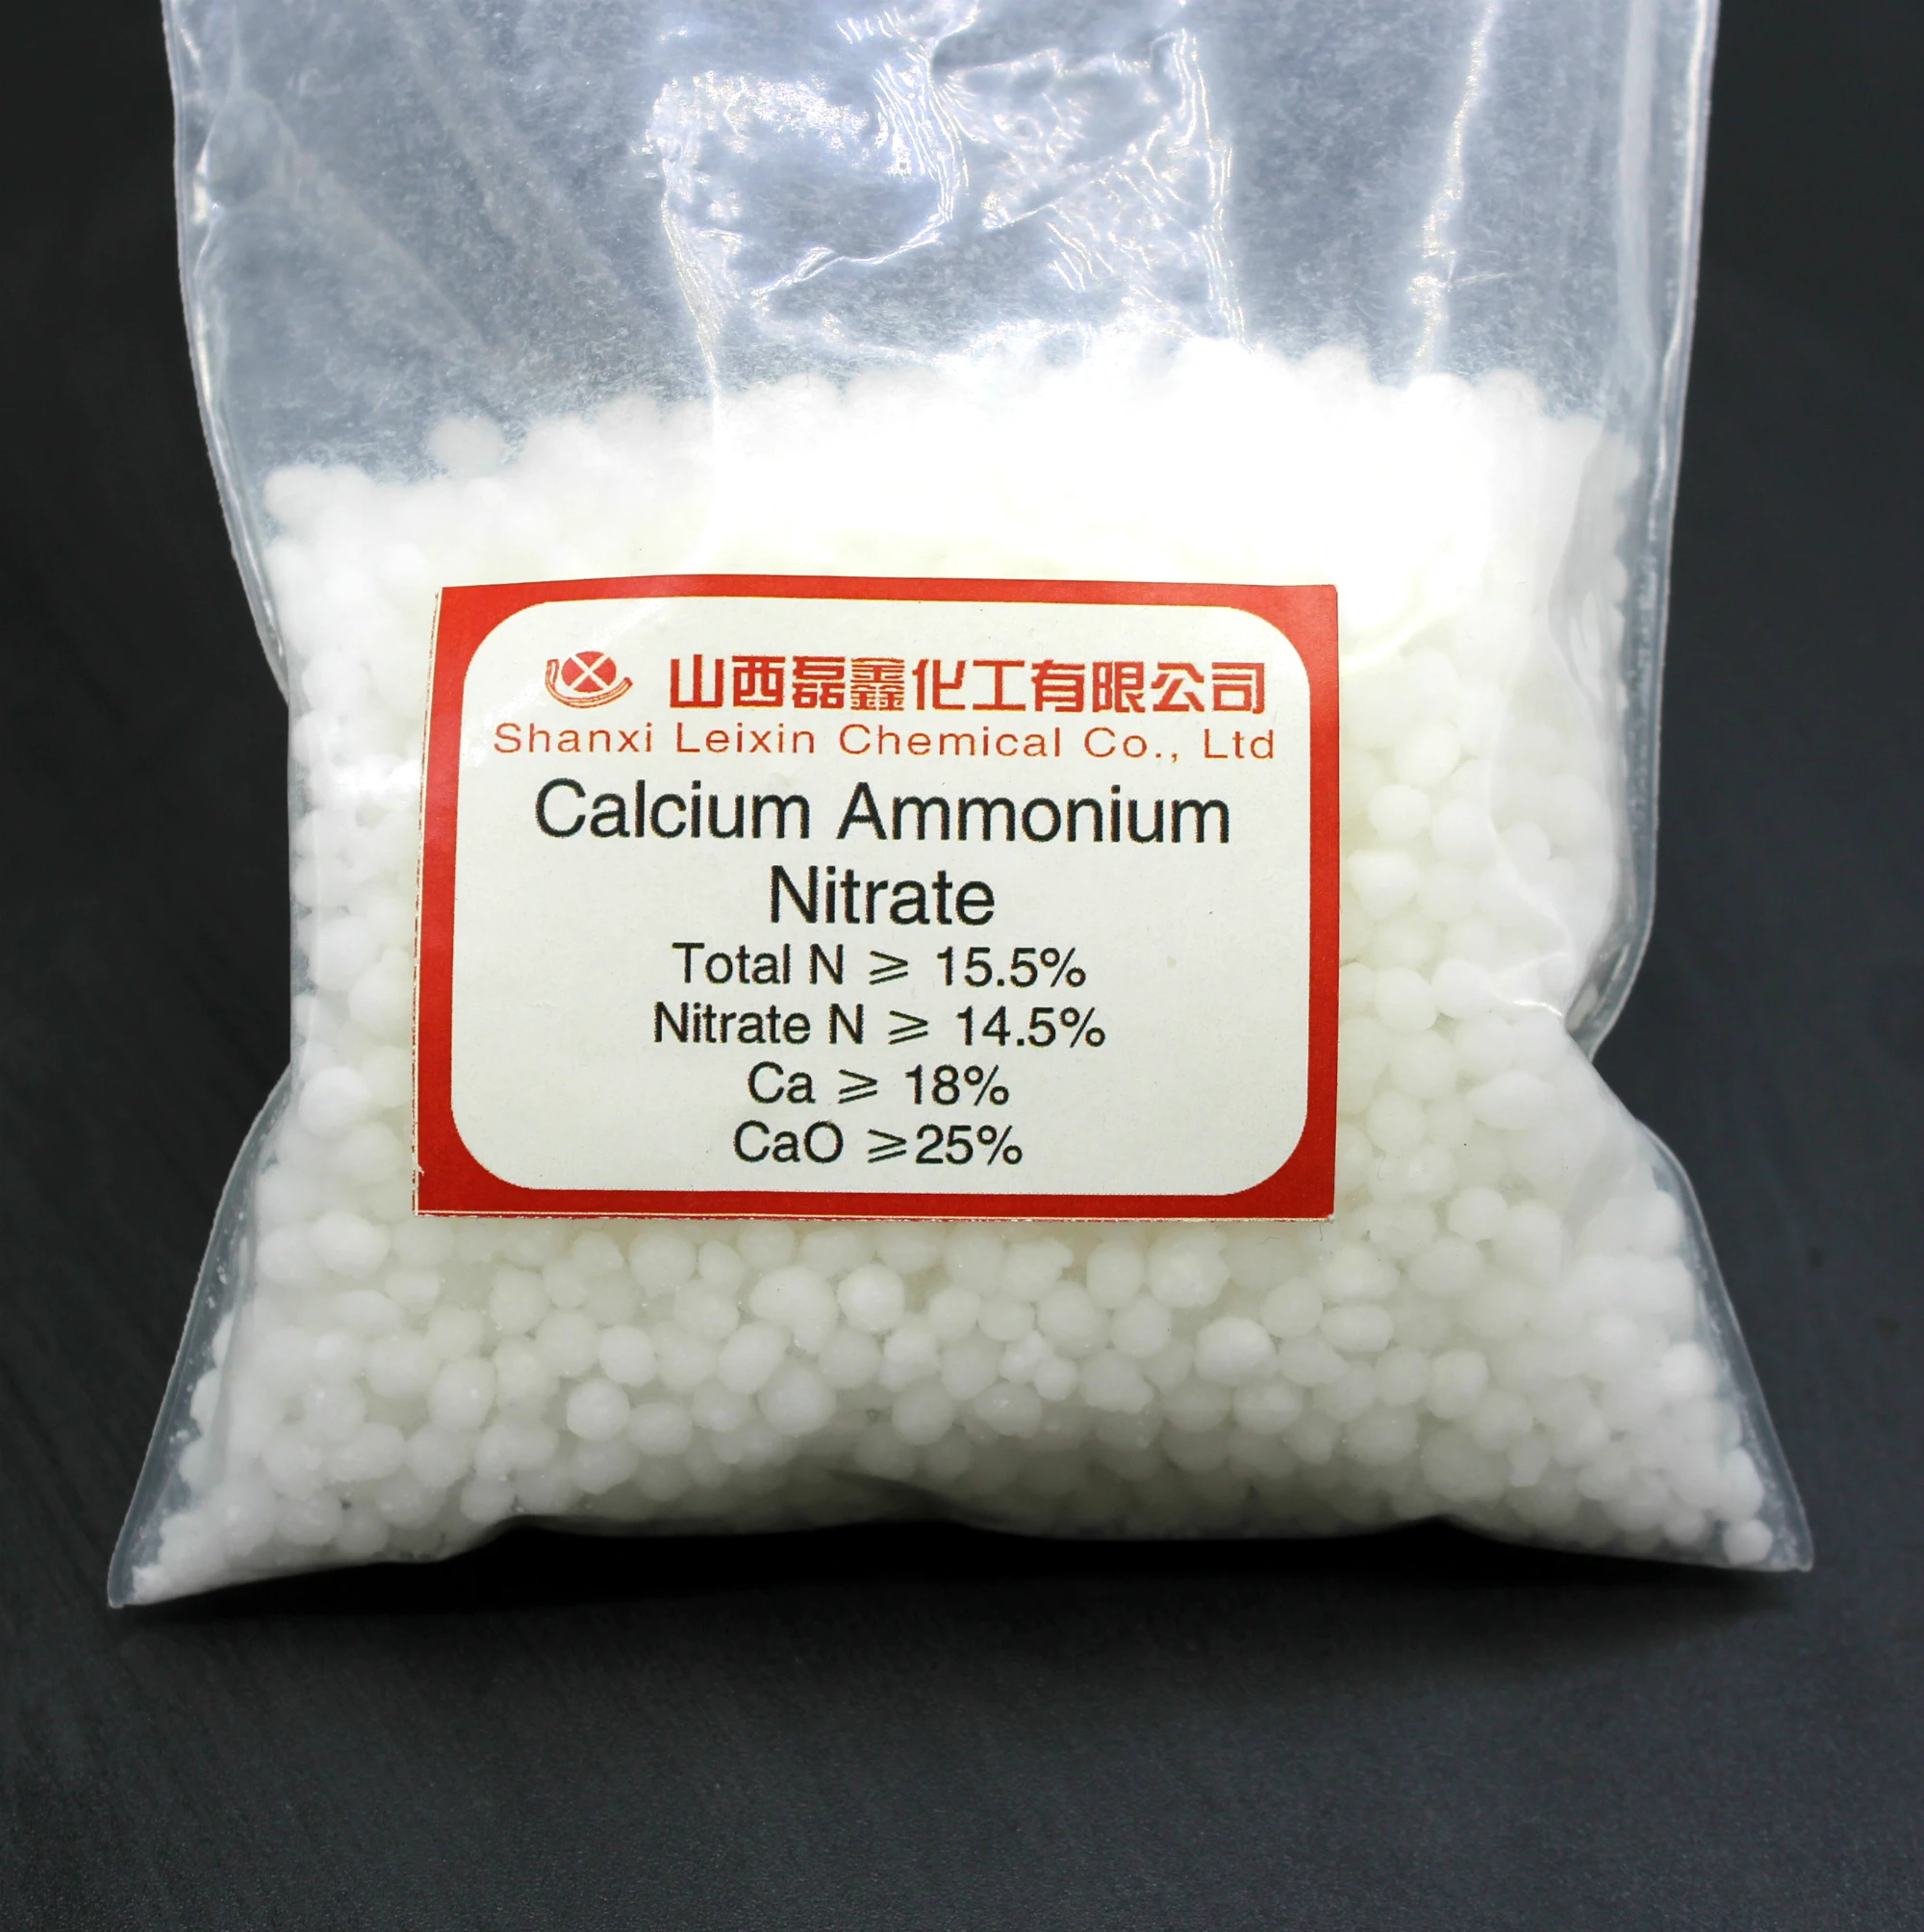 Russia Ammonium Nitrate Ban